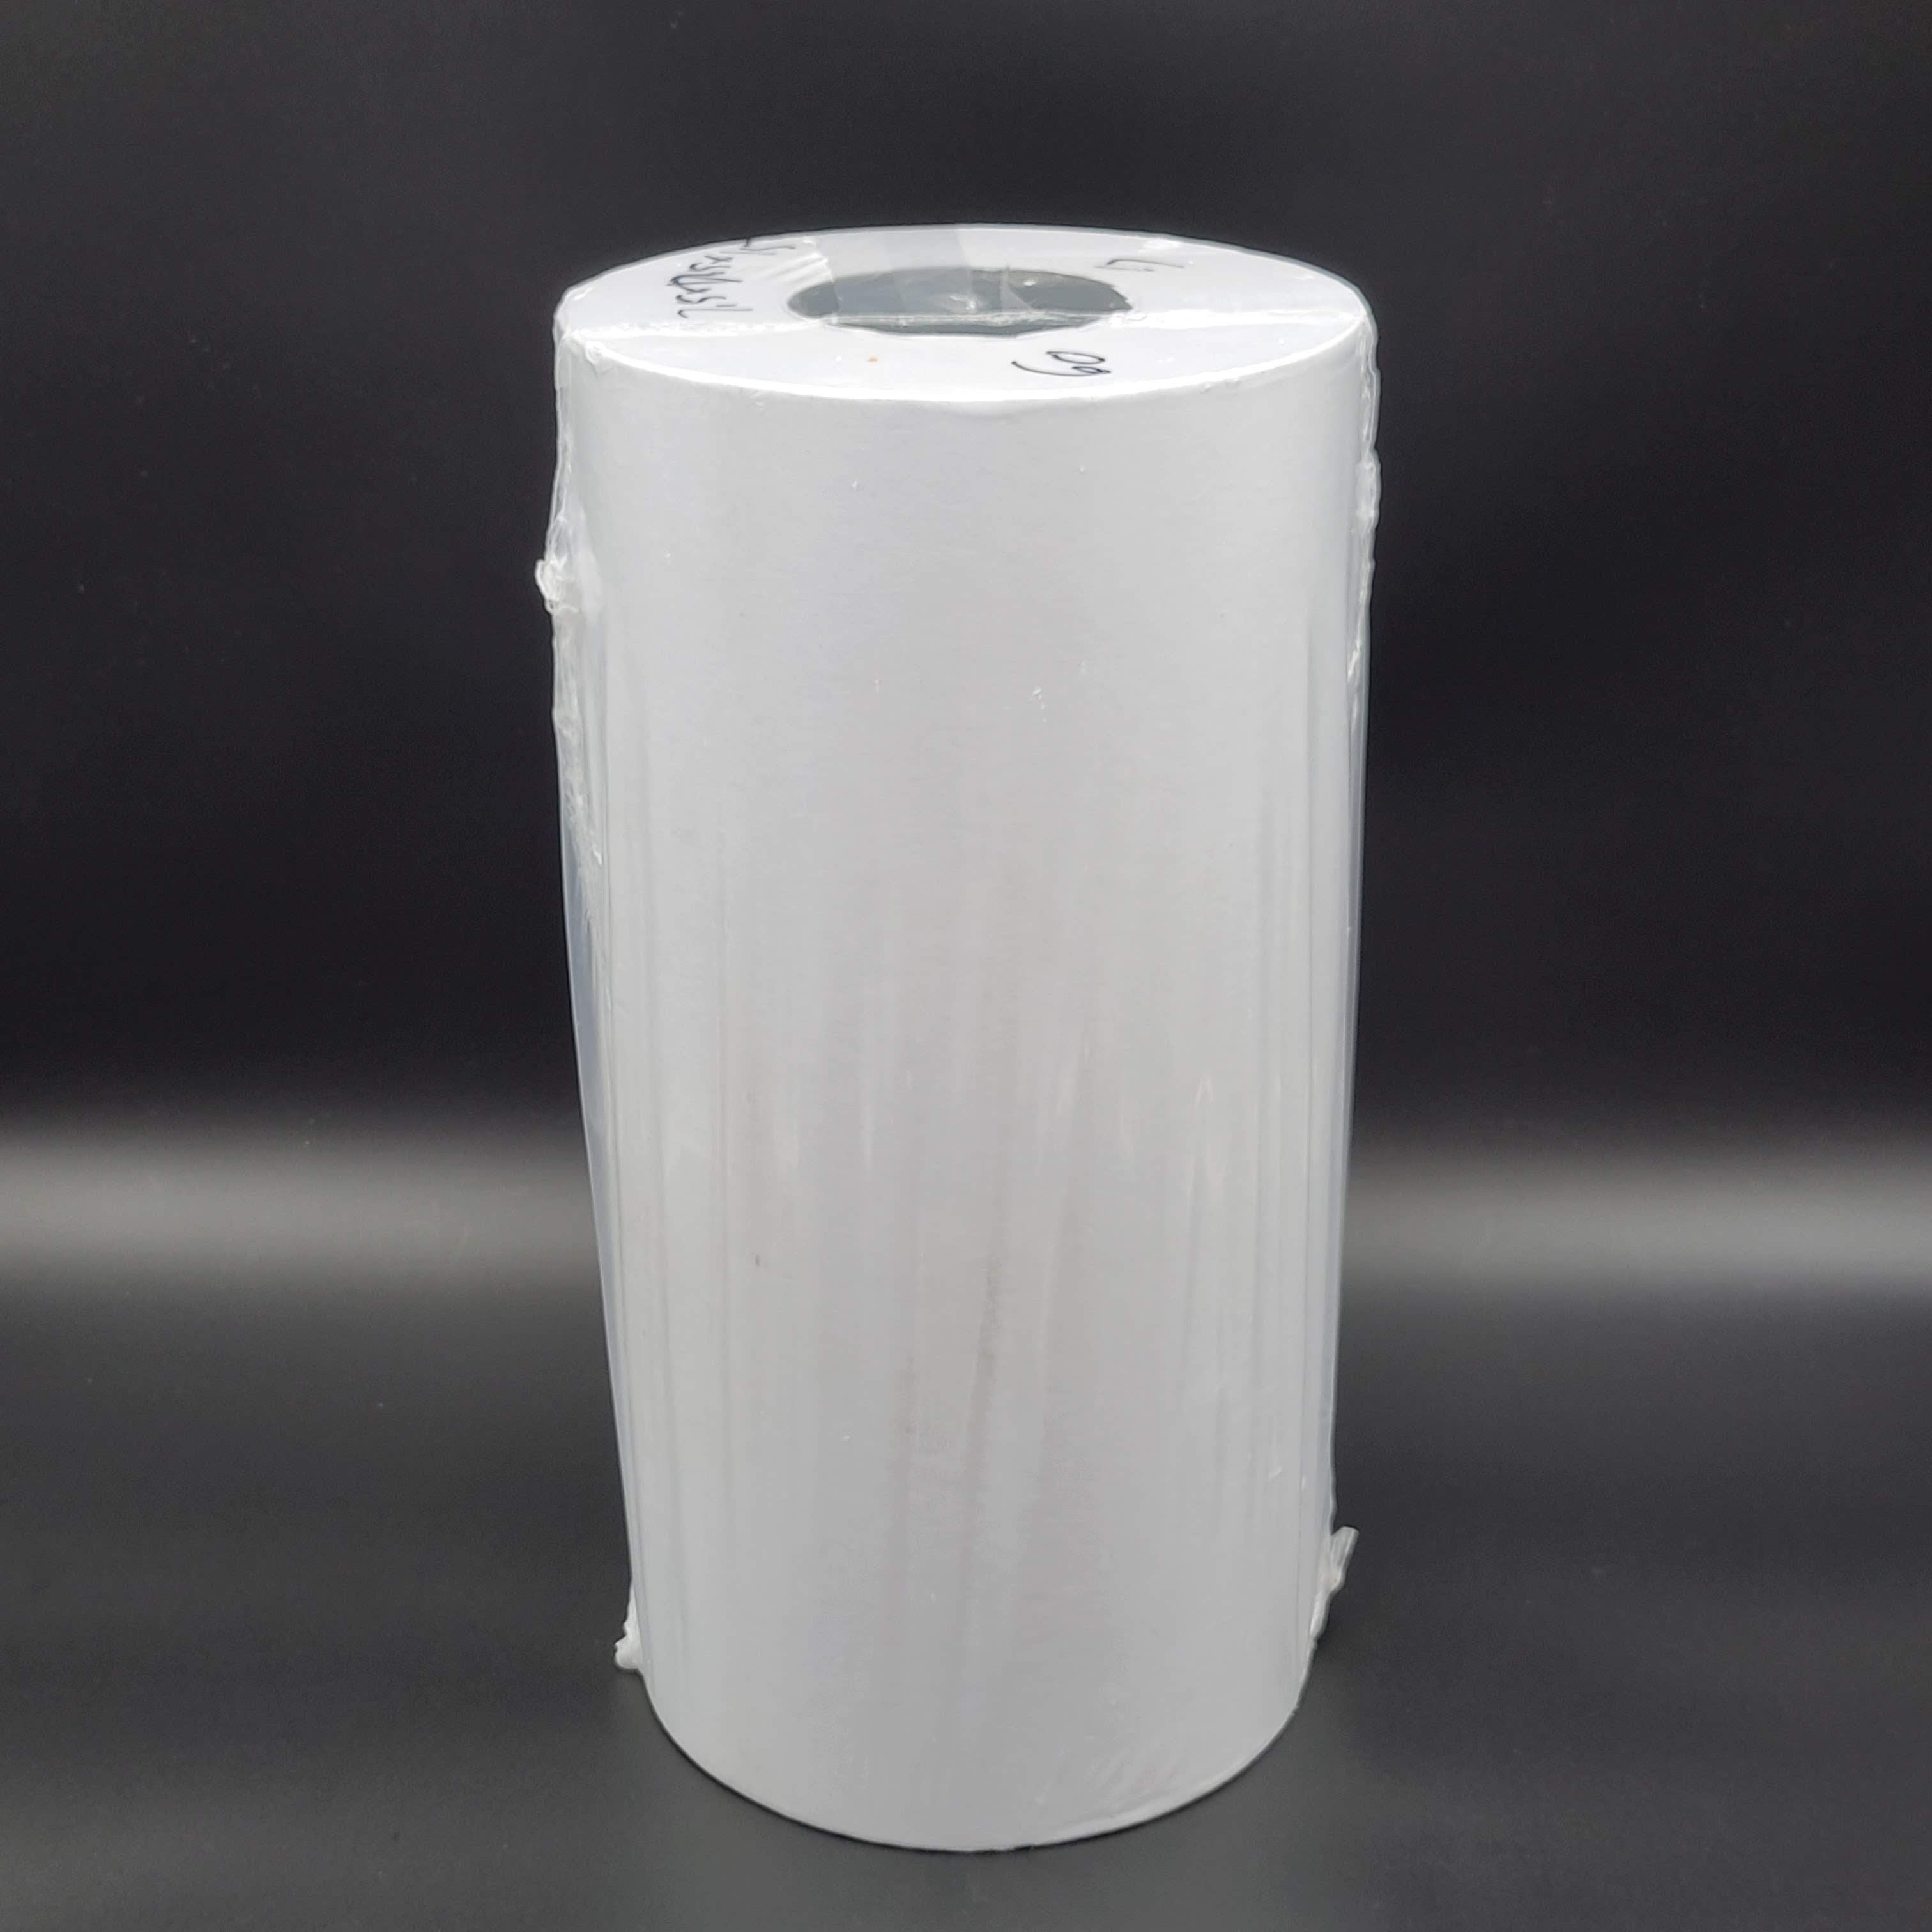 White Freezer Paper Roll 15" x 1100' - 1 Roll